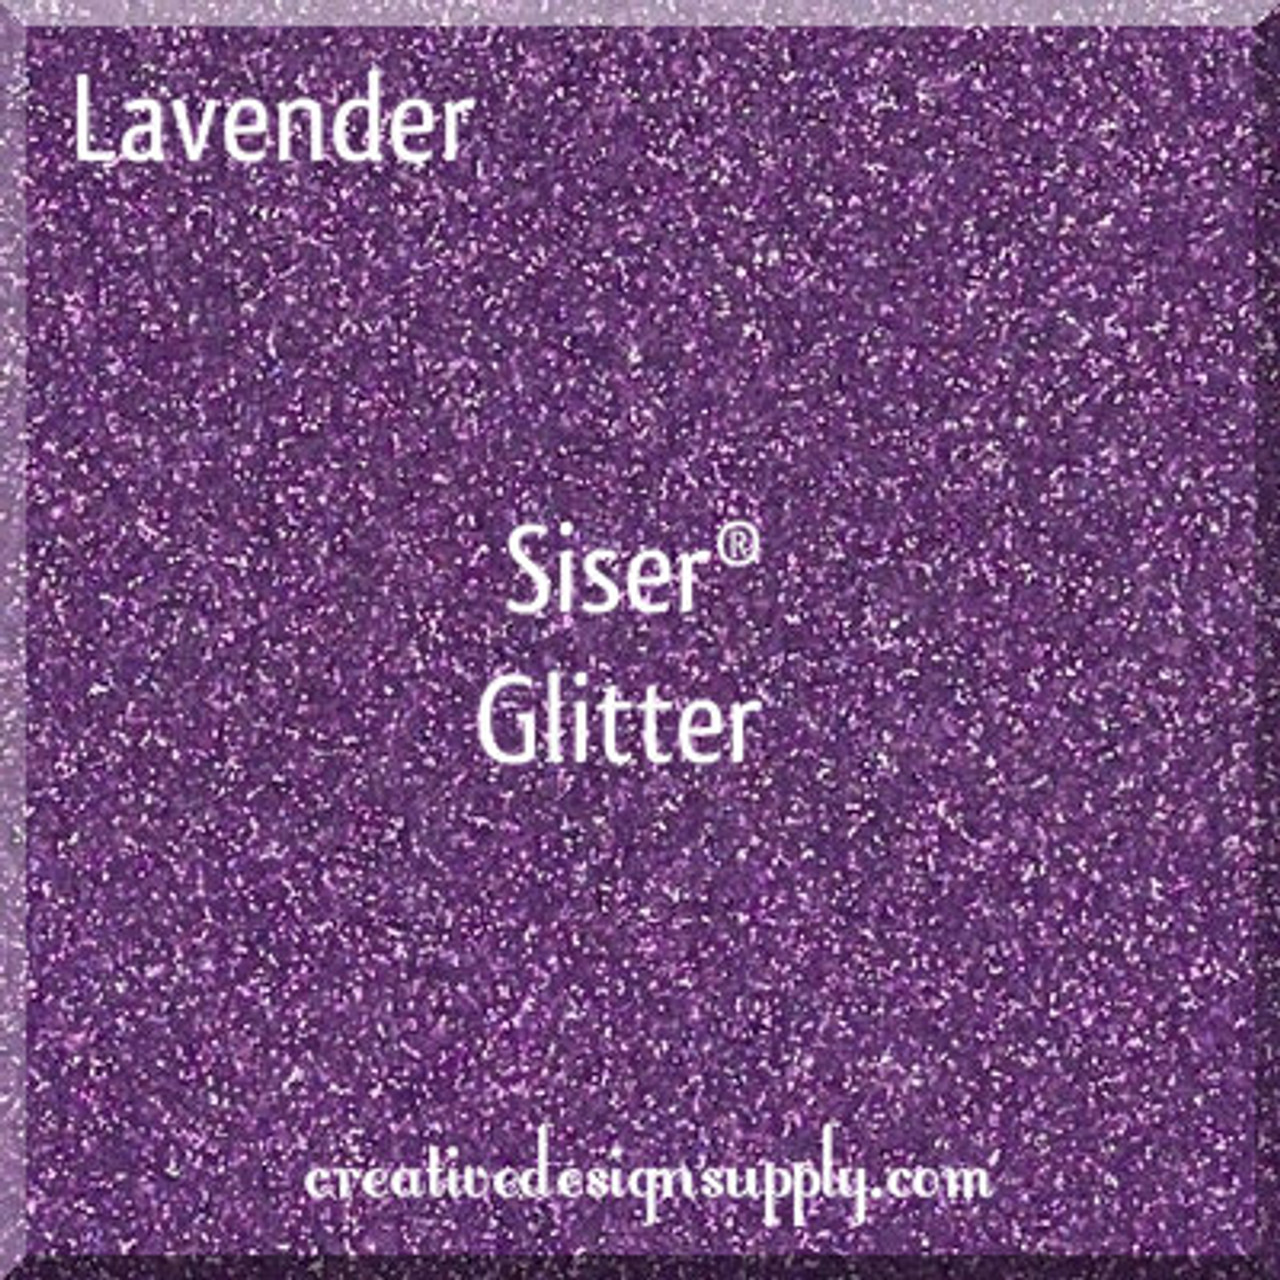 Siser Glitter HTV 20 x 12 Sheet - Iron on Heat Transfer Vinyl (Lilac)